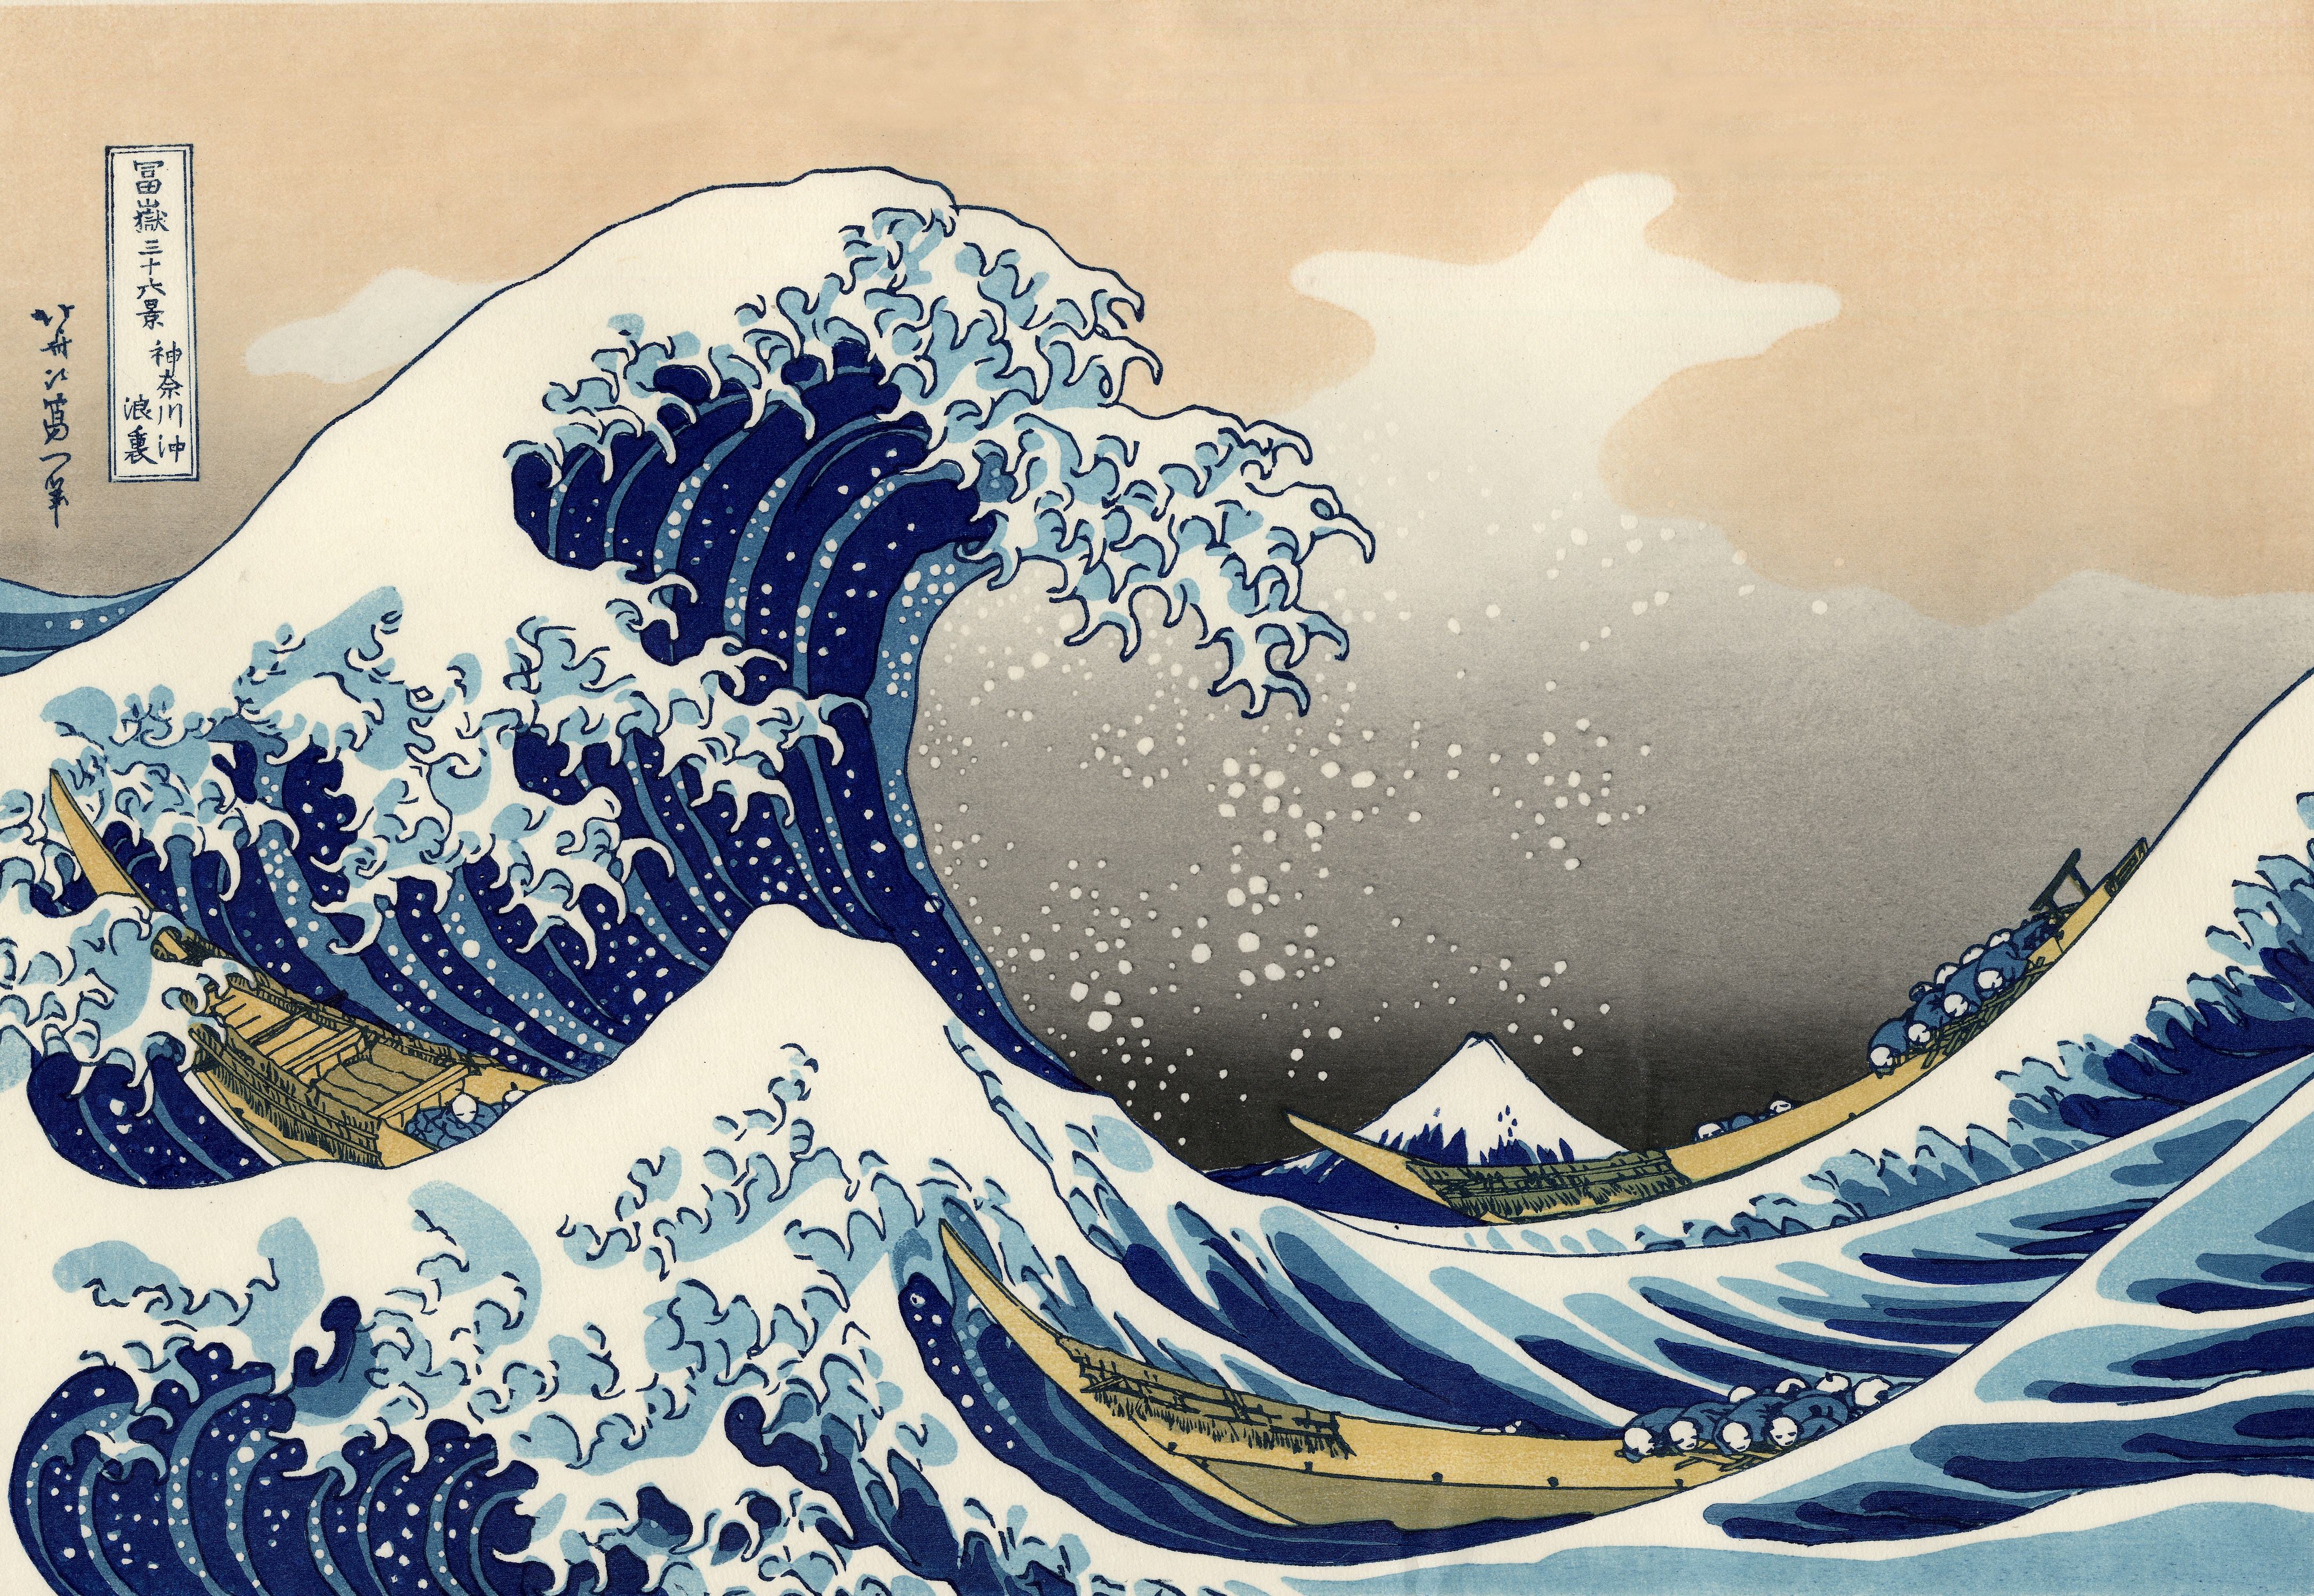 artistic, wave, the great wave off kanagawa 2160p